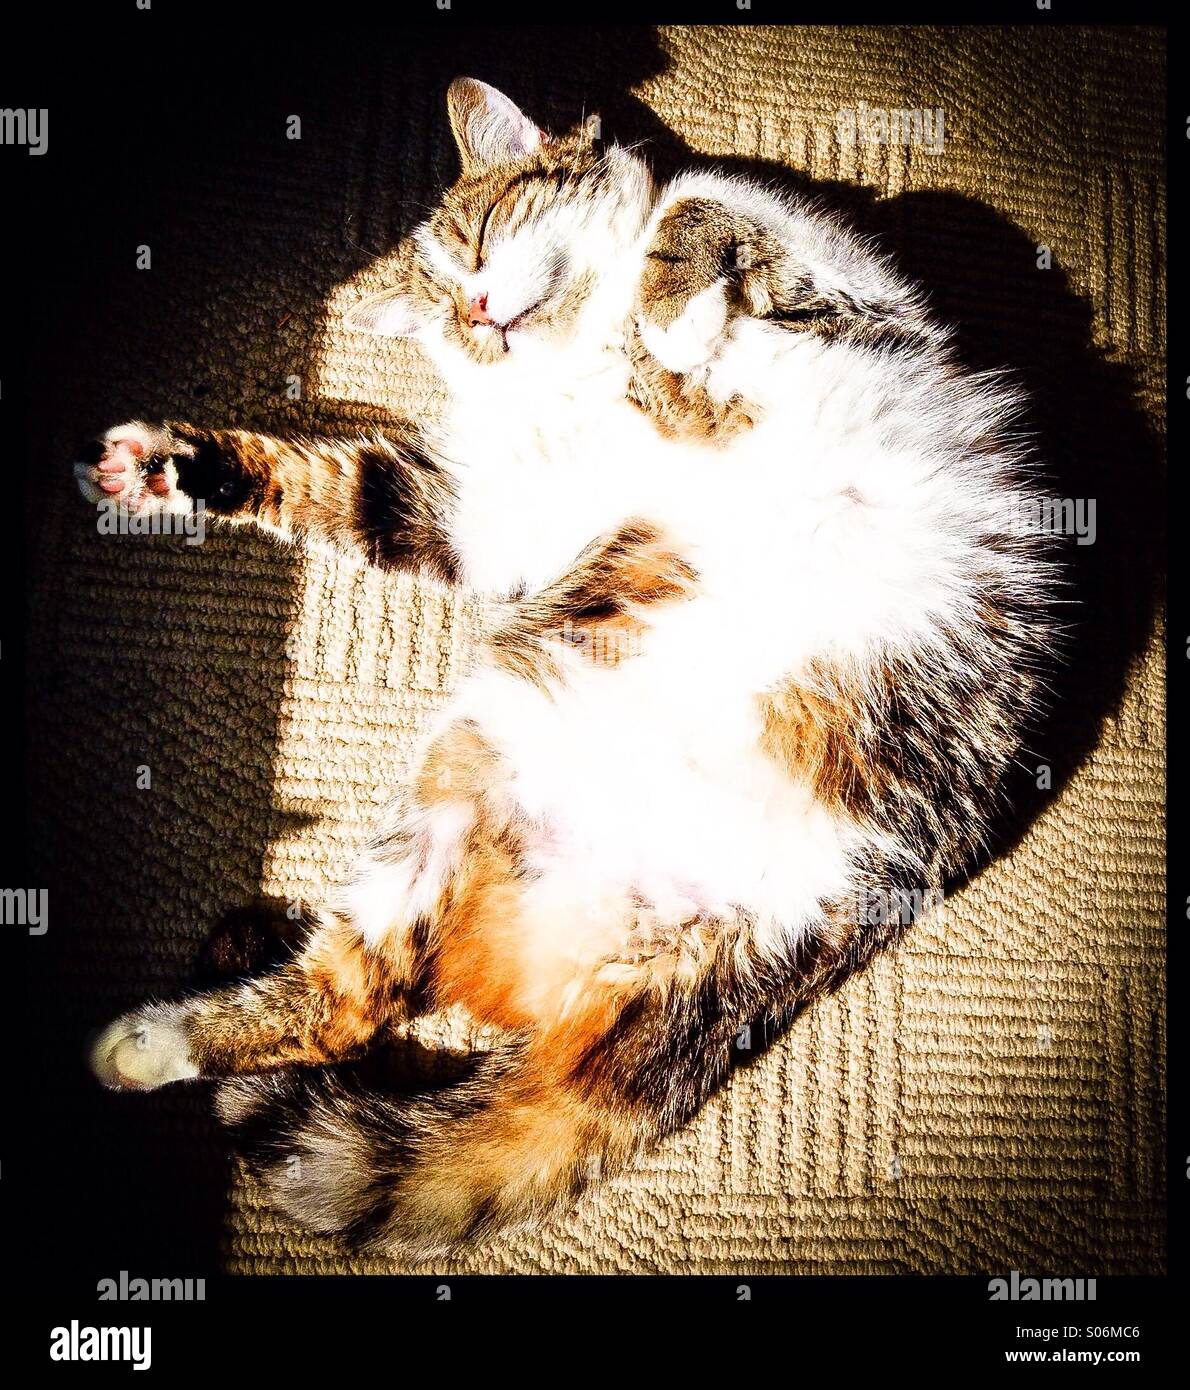 Cat with 3 legs sunbathing Stock Photo